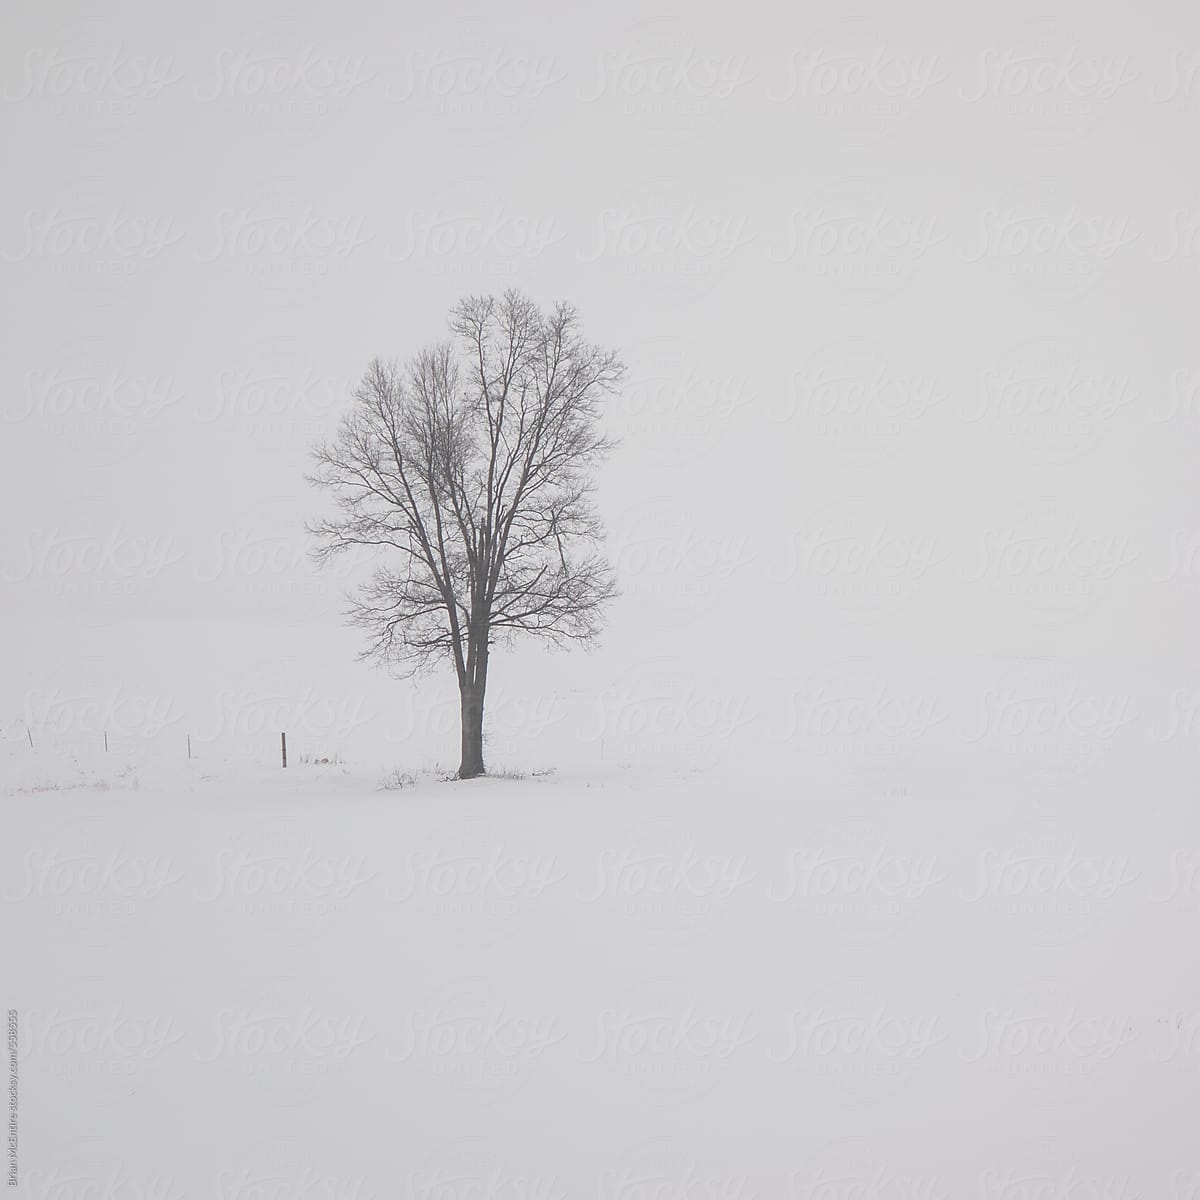 Lone Tree In Snowy Field with Fog